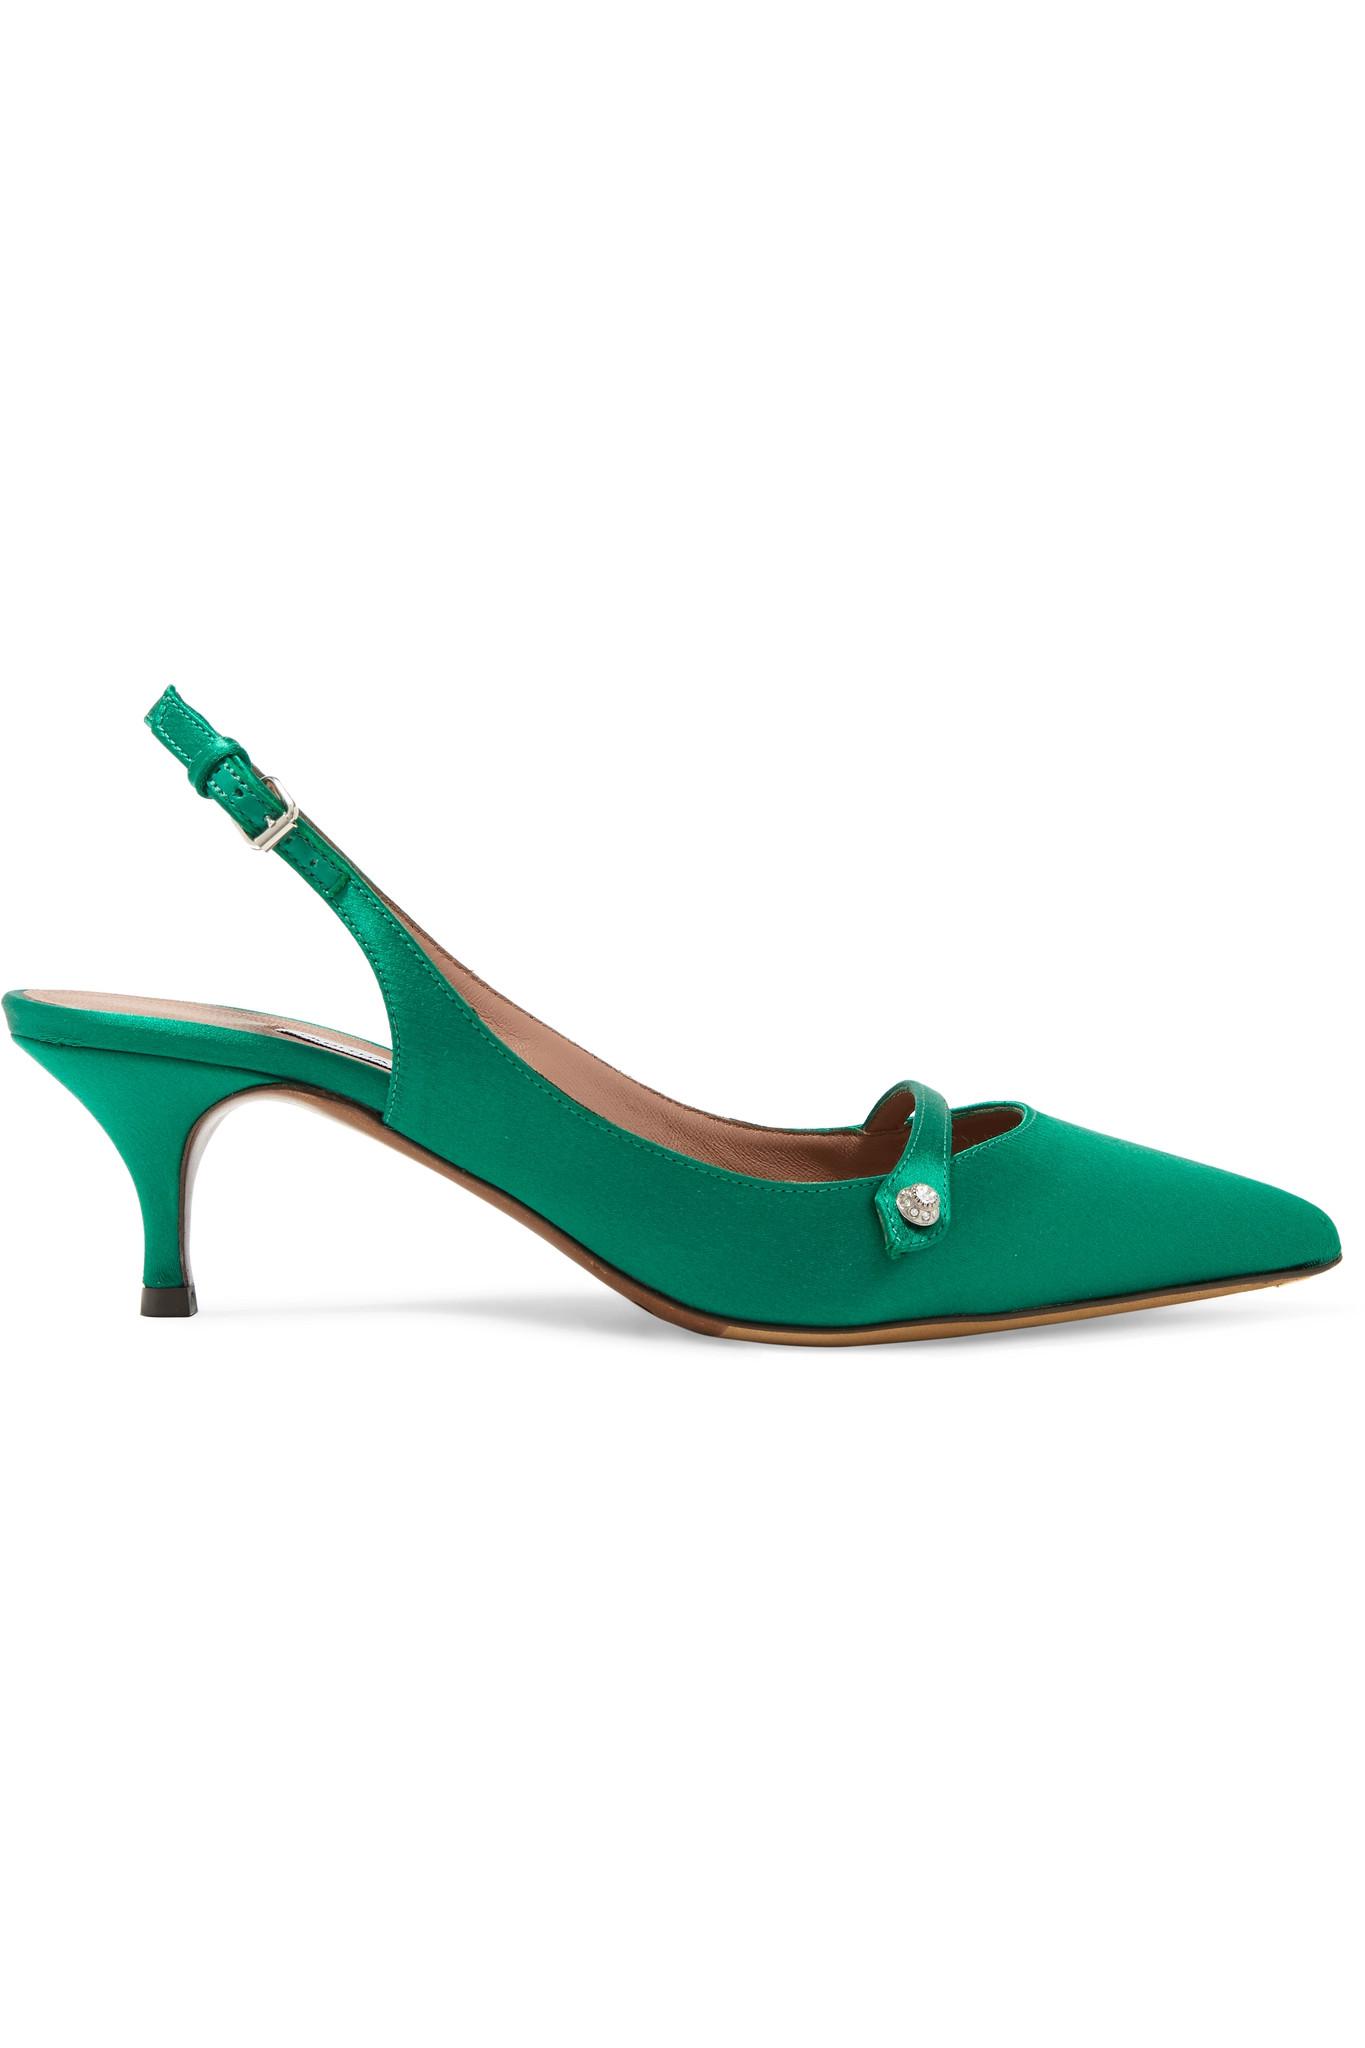 Tabitha Simmons Satin Slingback Pumps Emerald in Green - Lyst